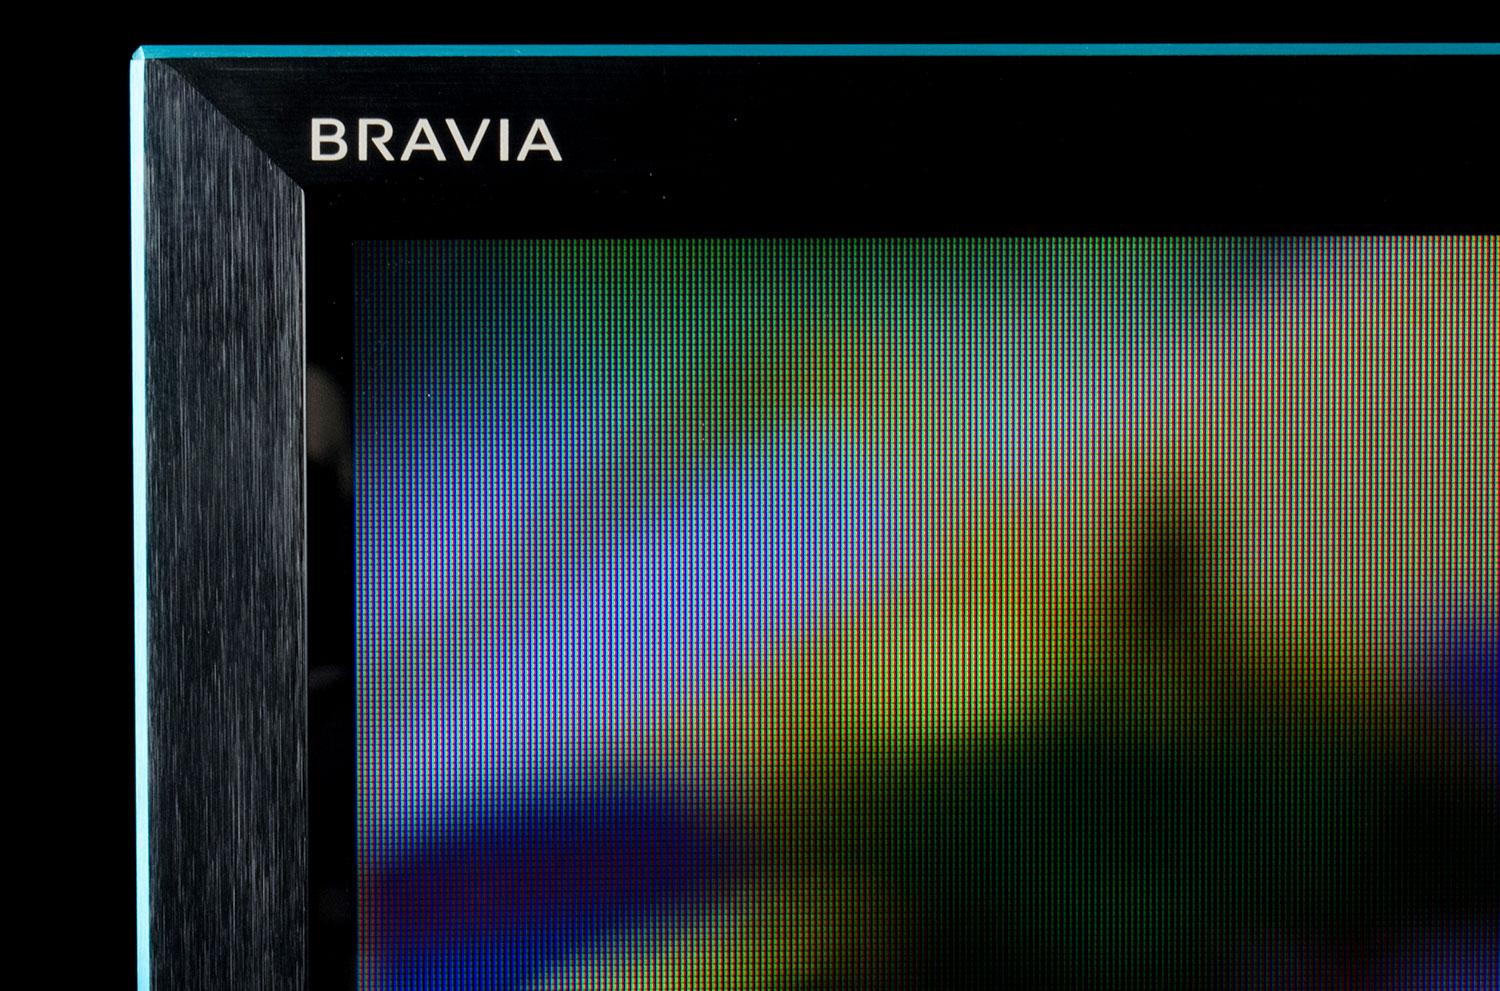 Sony Bravia KDL-55W802A Review | Digital Trends